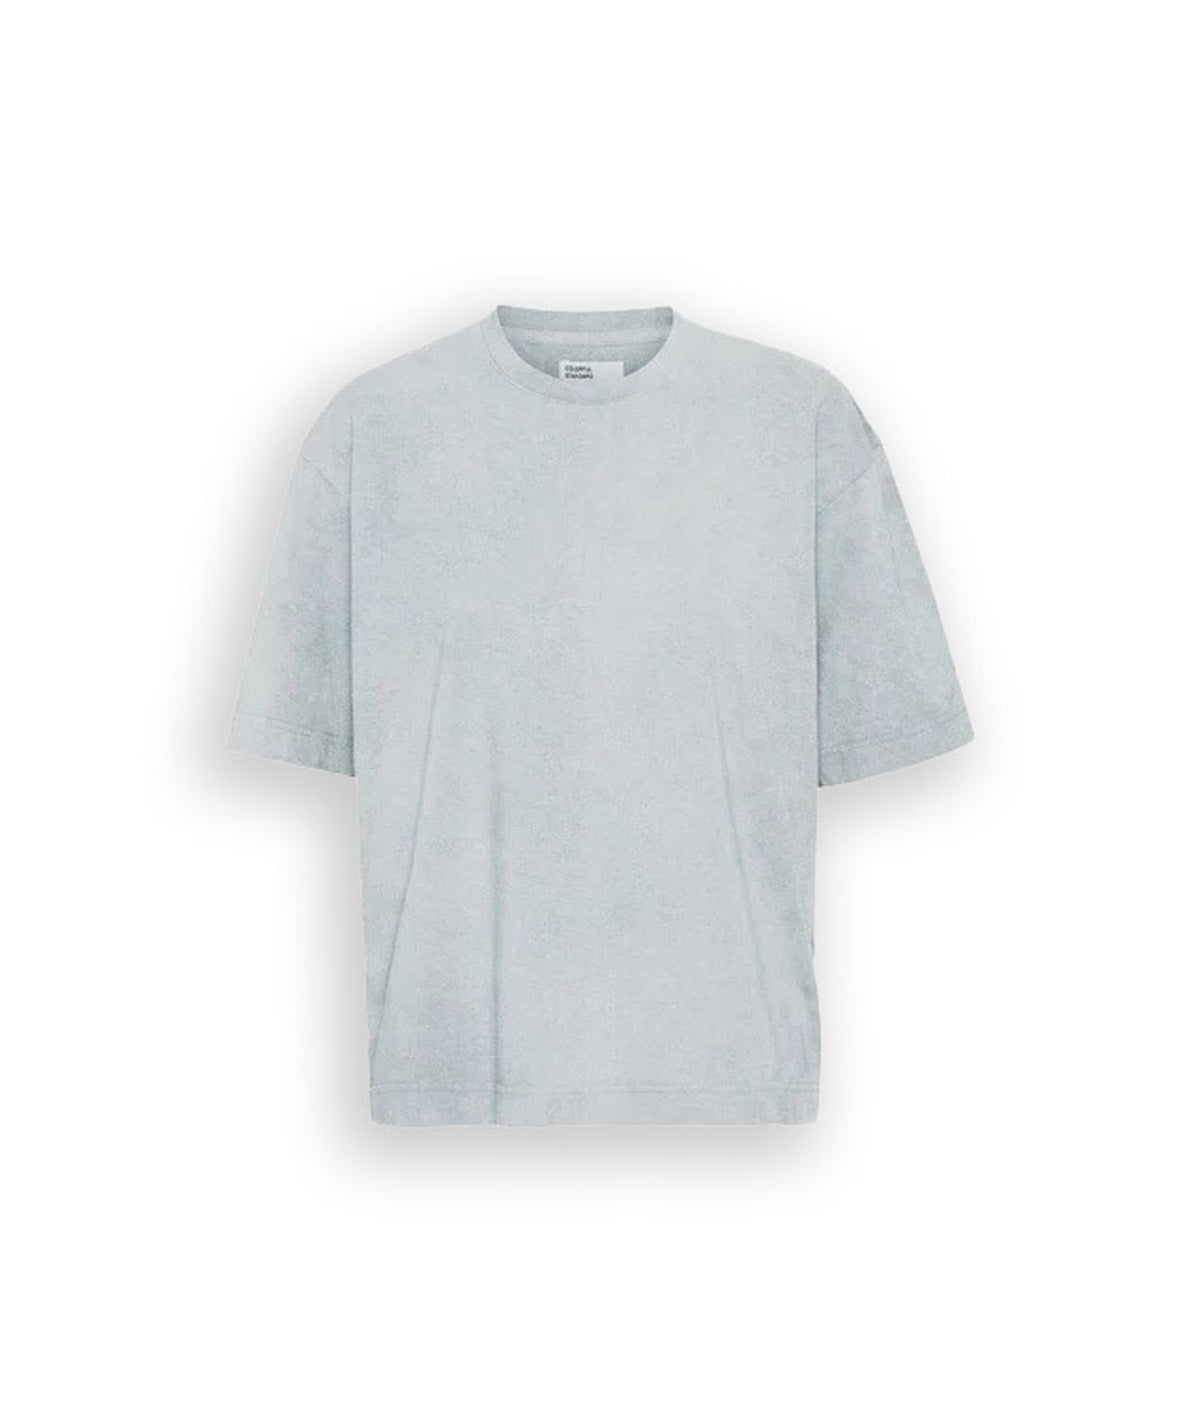 Oversized Colorful Standard T-Shirt Organic Cotton Gray Unisex